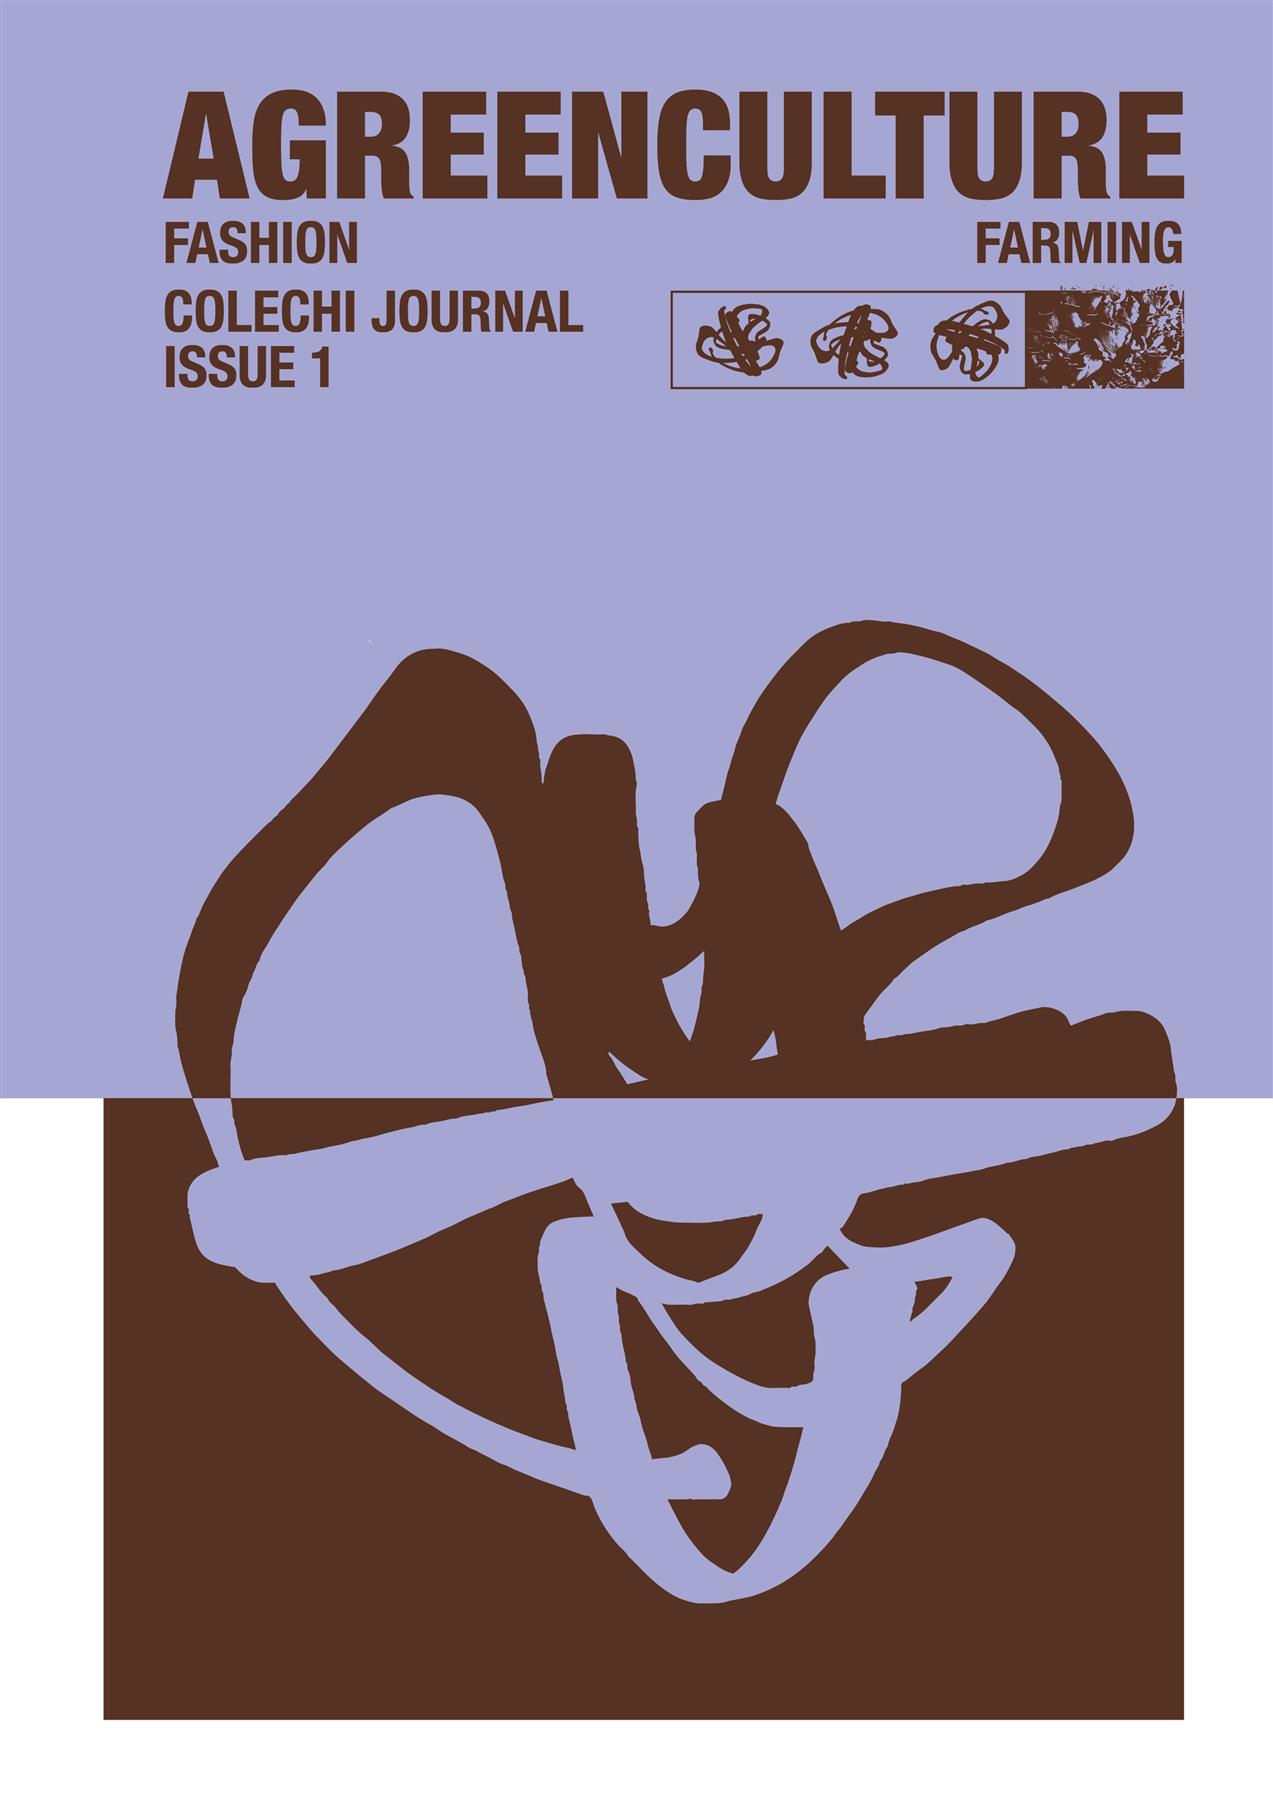 Colechi Journal